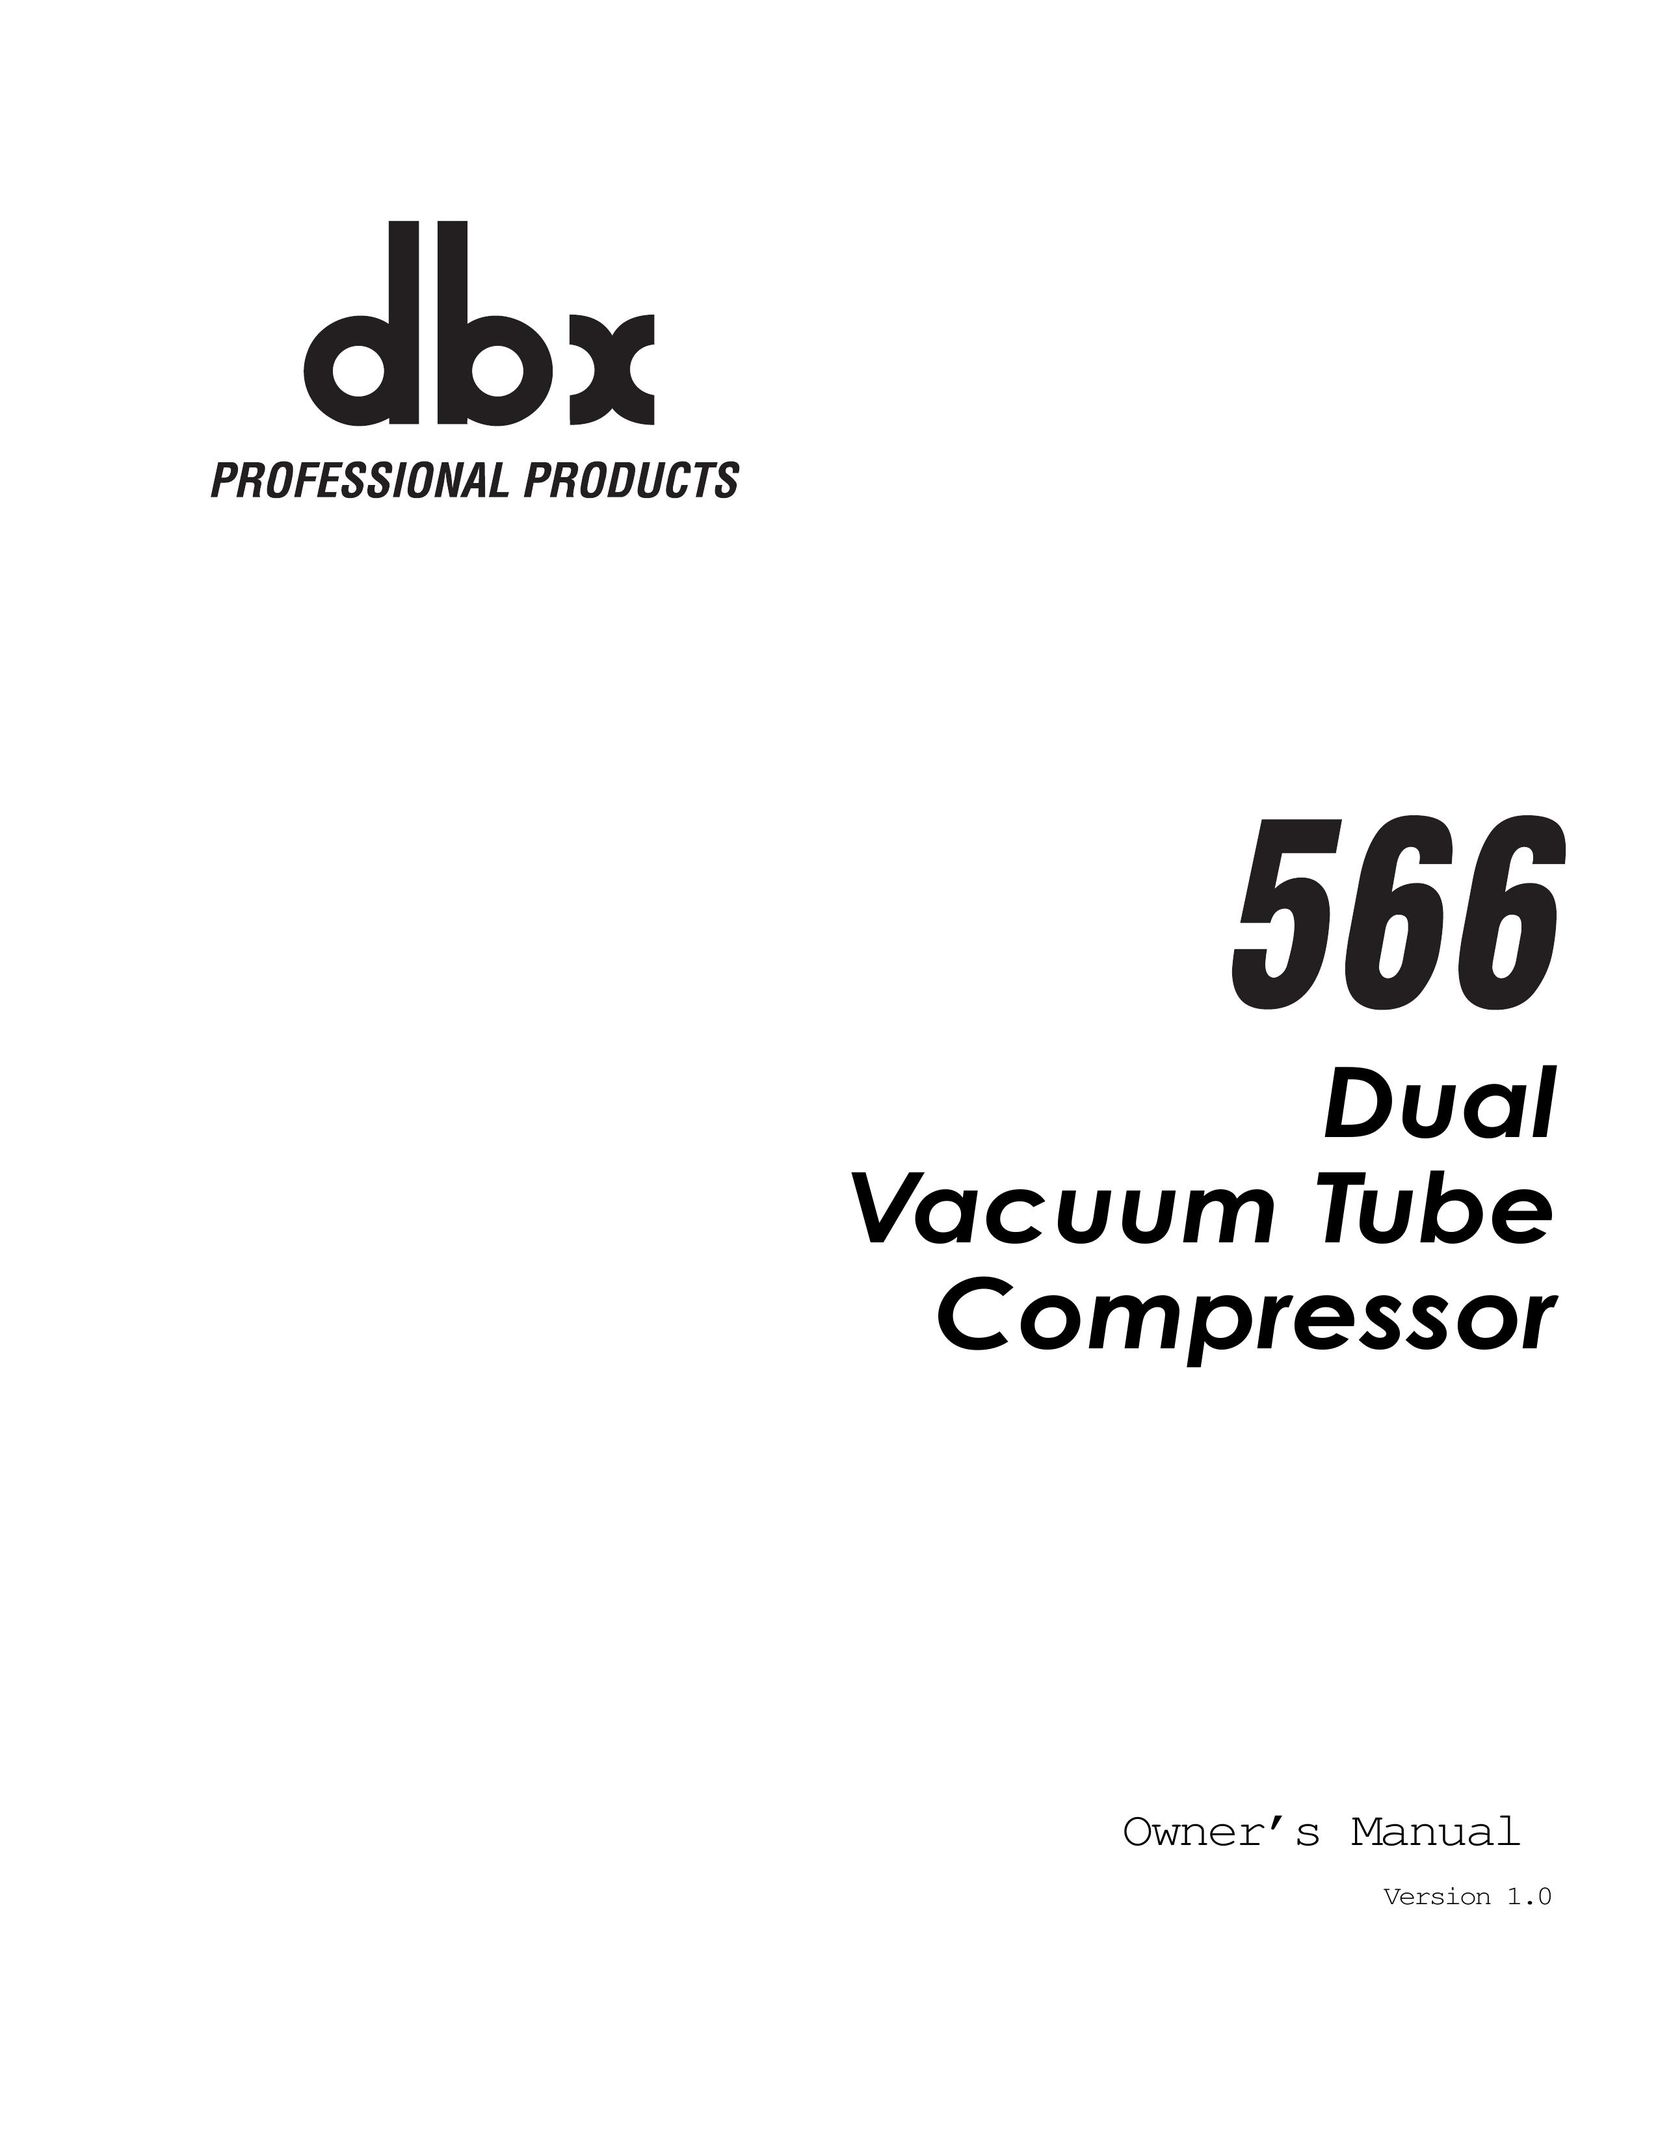 dbx Pro 566 Vacuum Cleaner User Manual